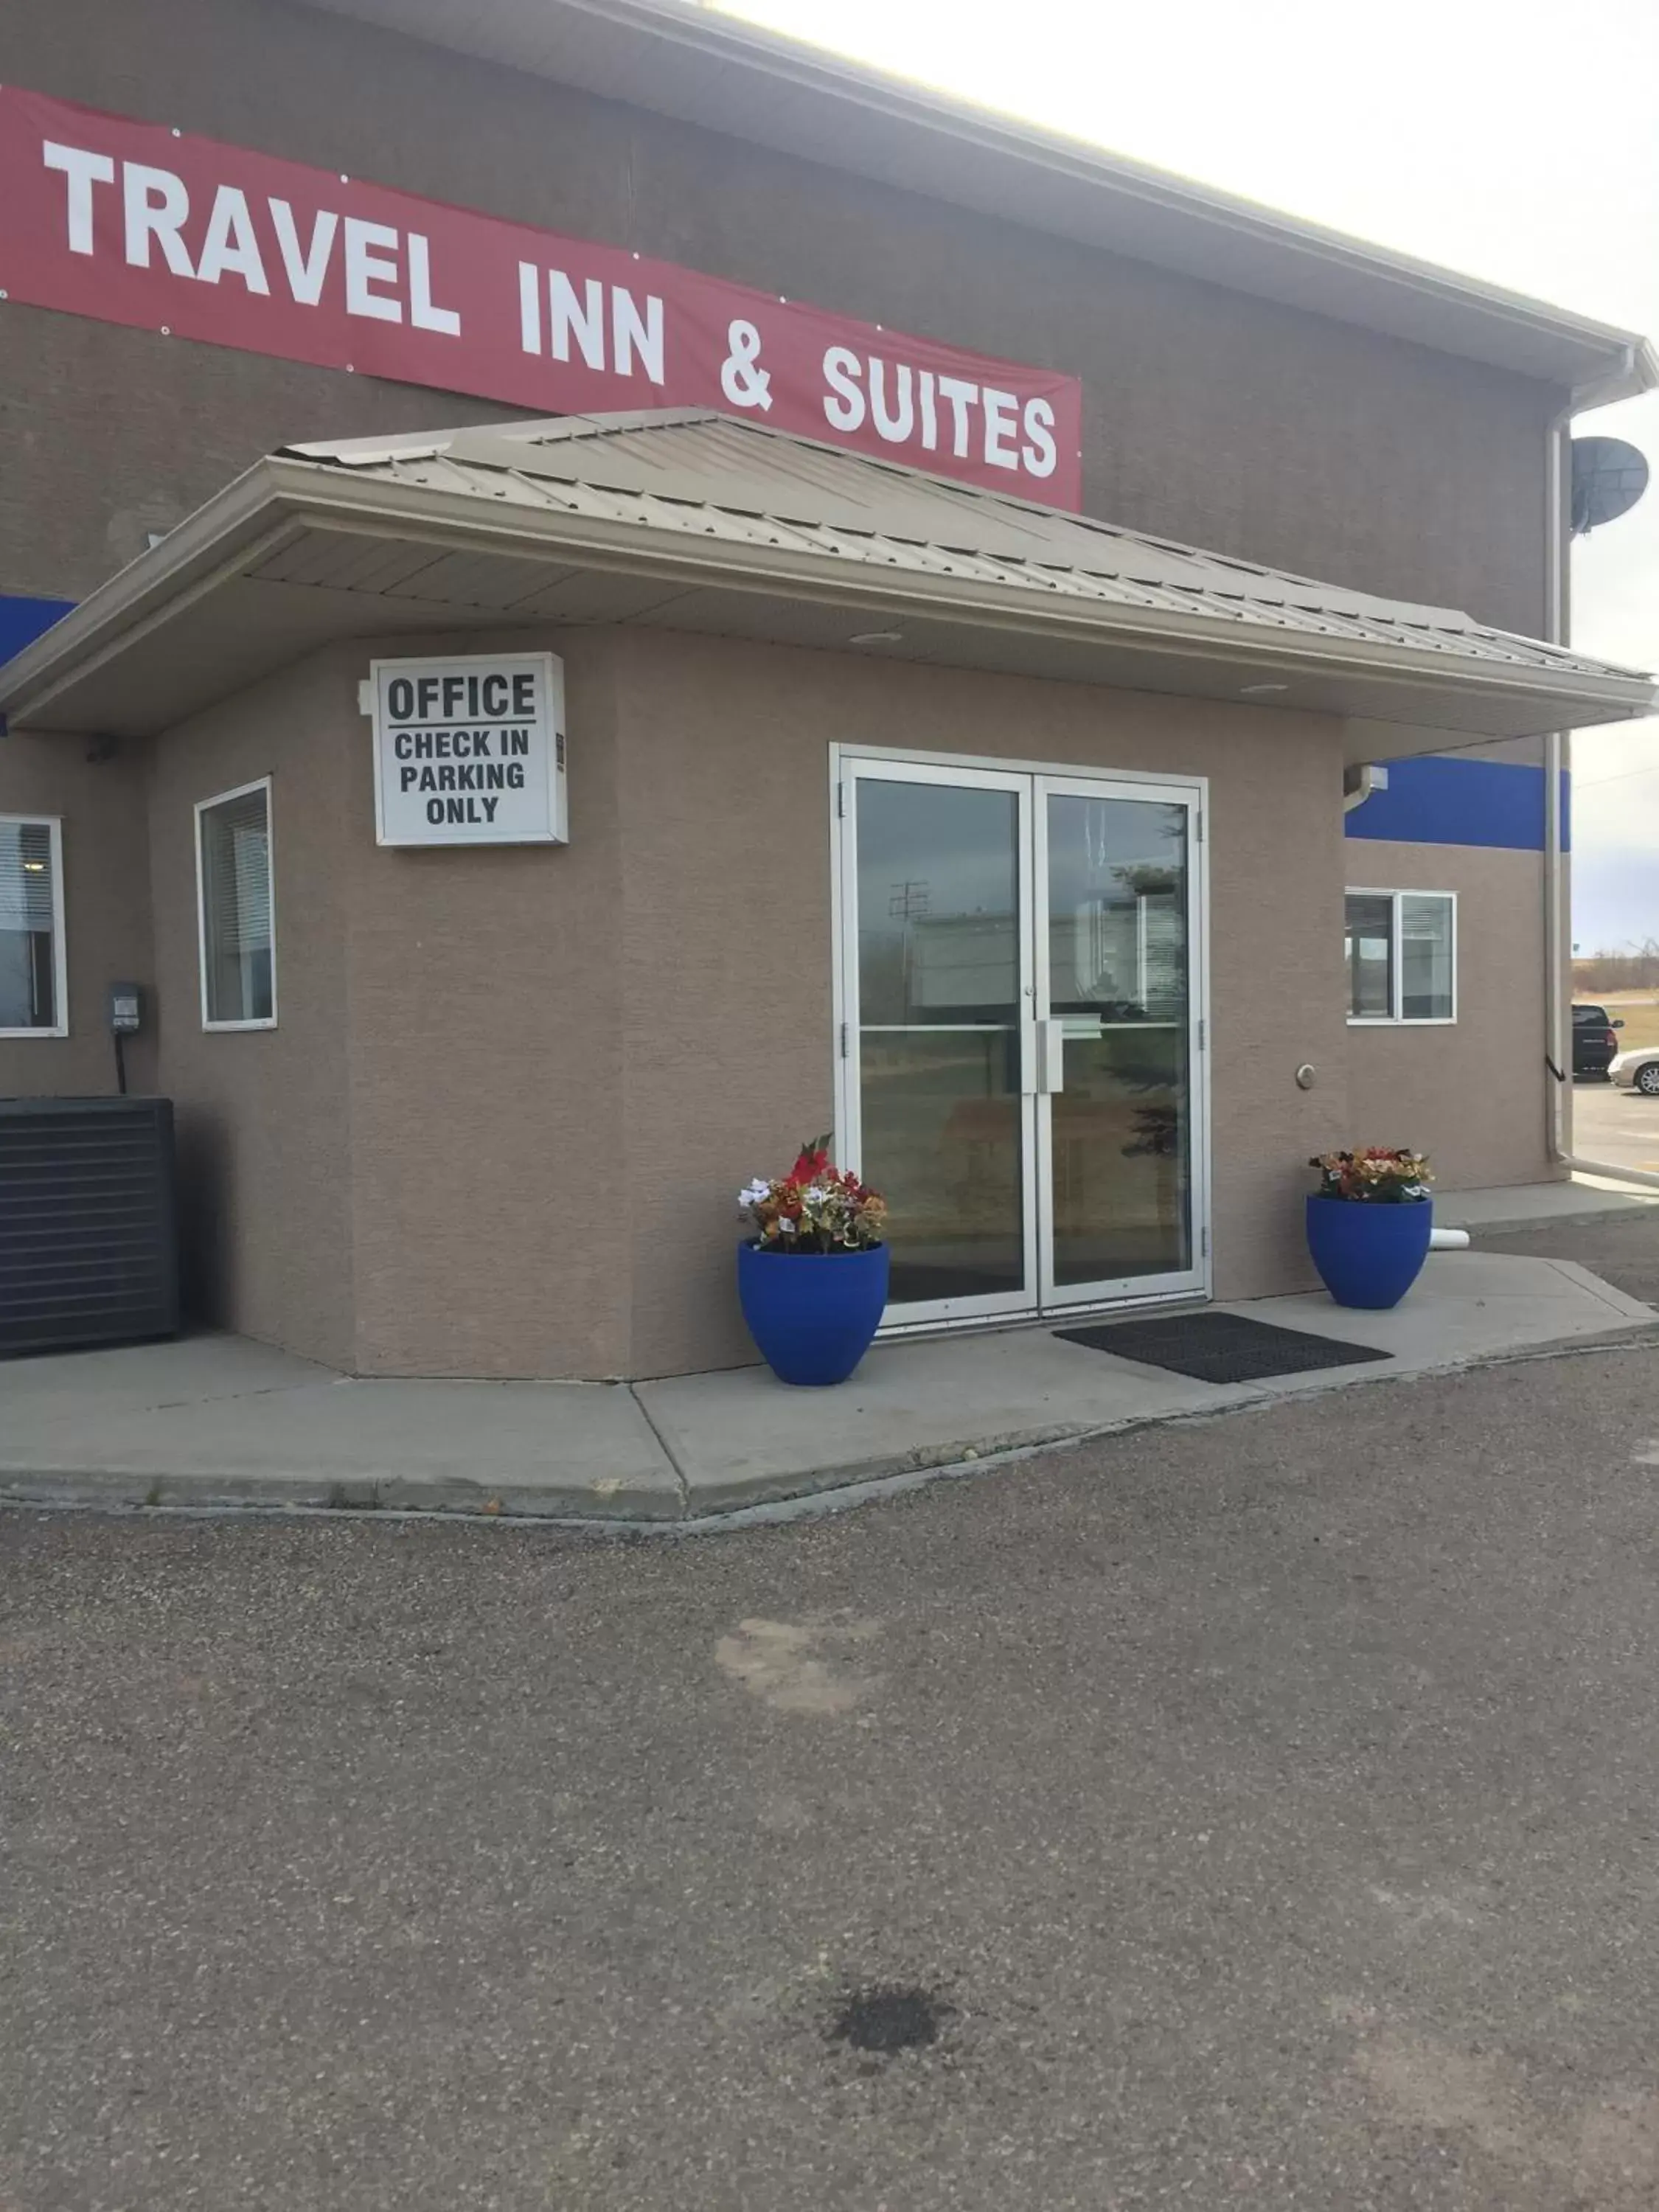 Facade/entrance in Travel Inn & Suites